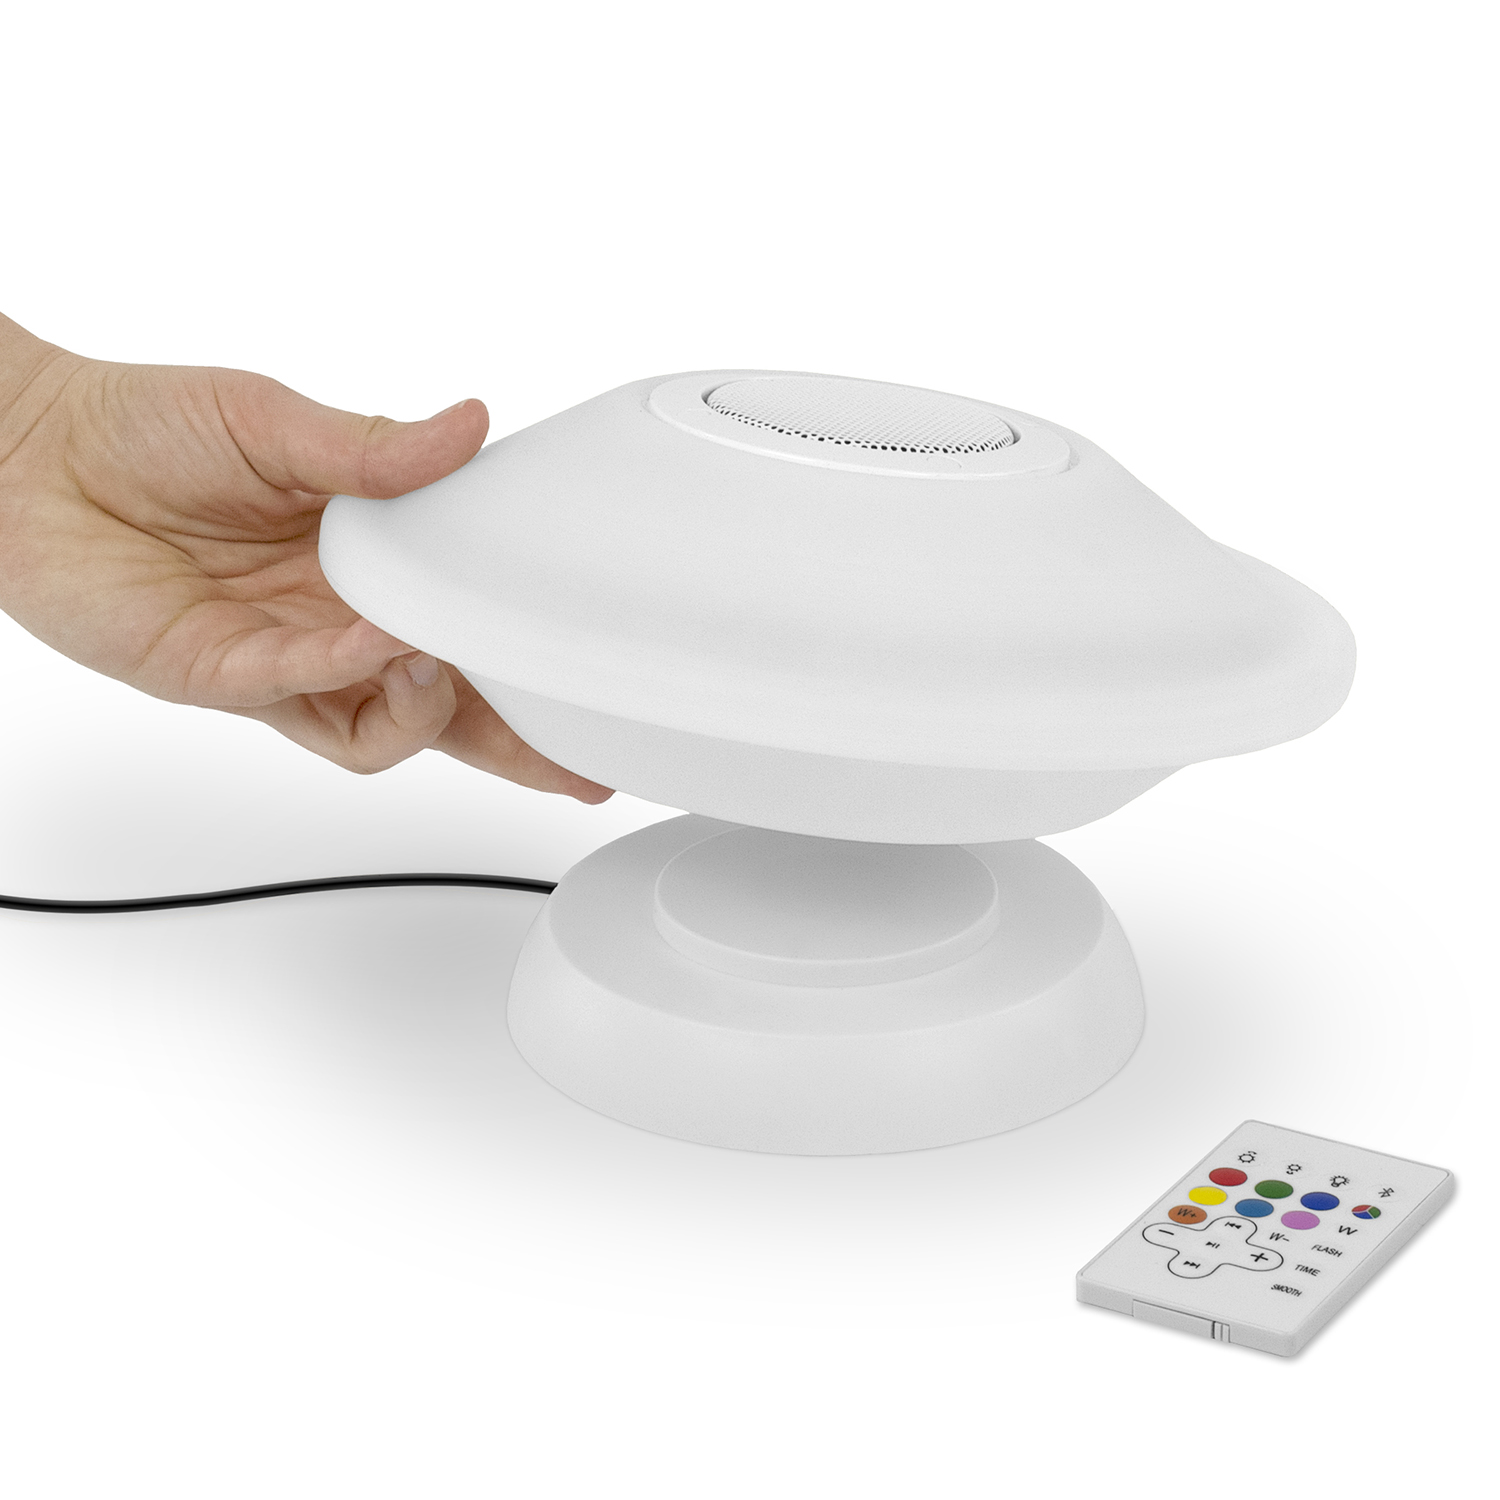 Innovative Technology Glowing Waterproof Rechargeable Bluetooth Pool Speaker - image 3 of 3